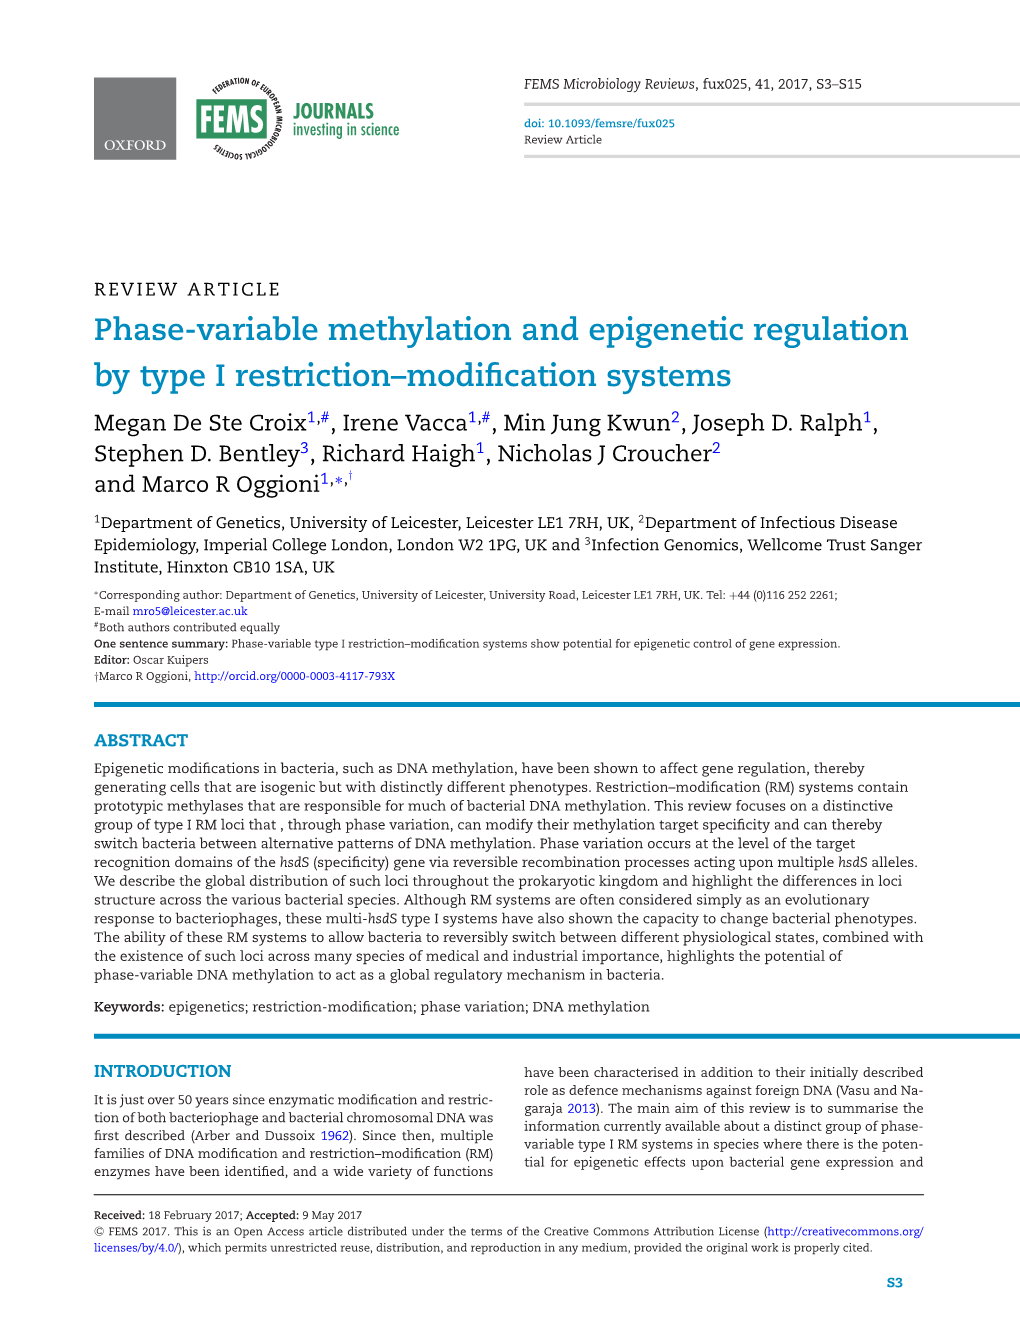 Phase-Variable Methylation and Epigenetic Regulation by Type I